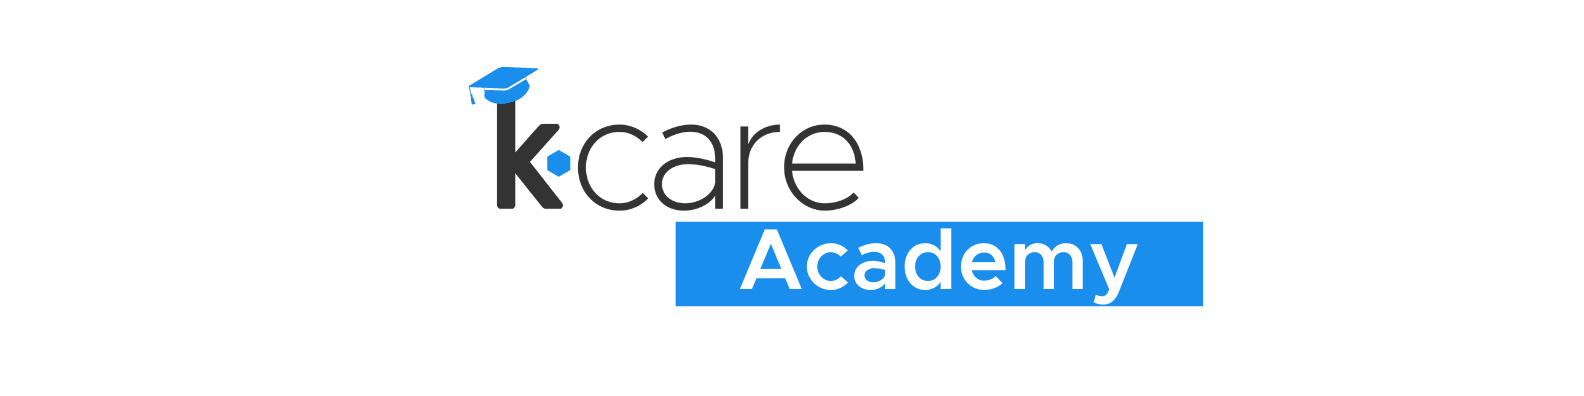 KCare Academy Banner